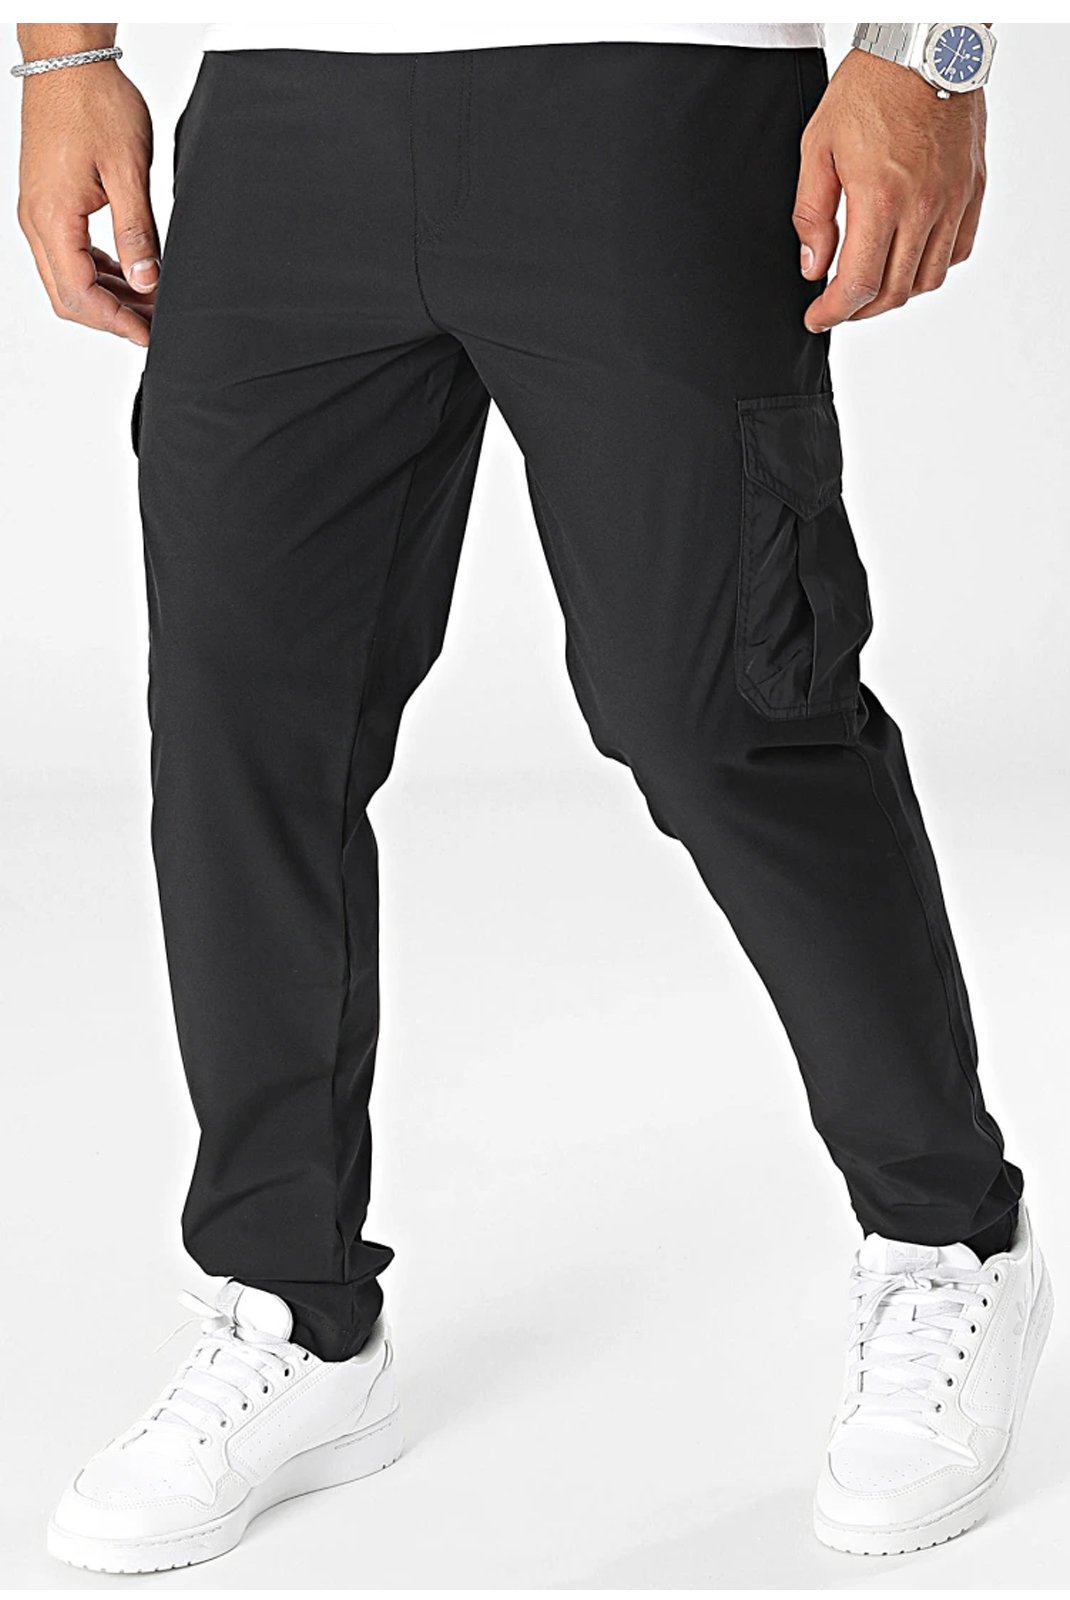 Pantalons sport/streetwear  Helvetica TORNADE BLACK